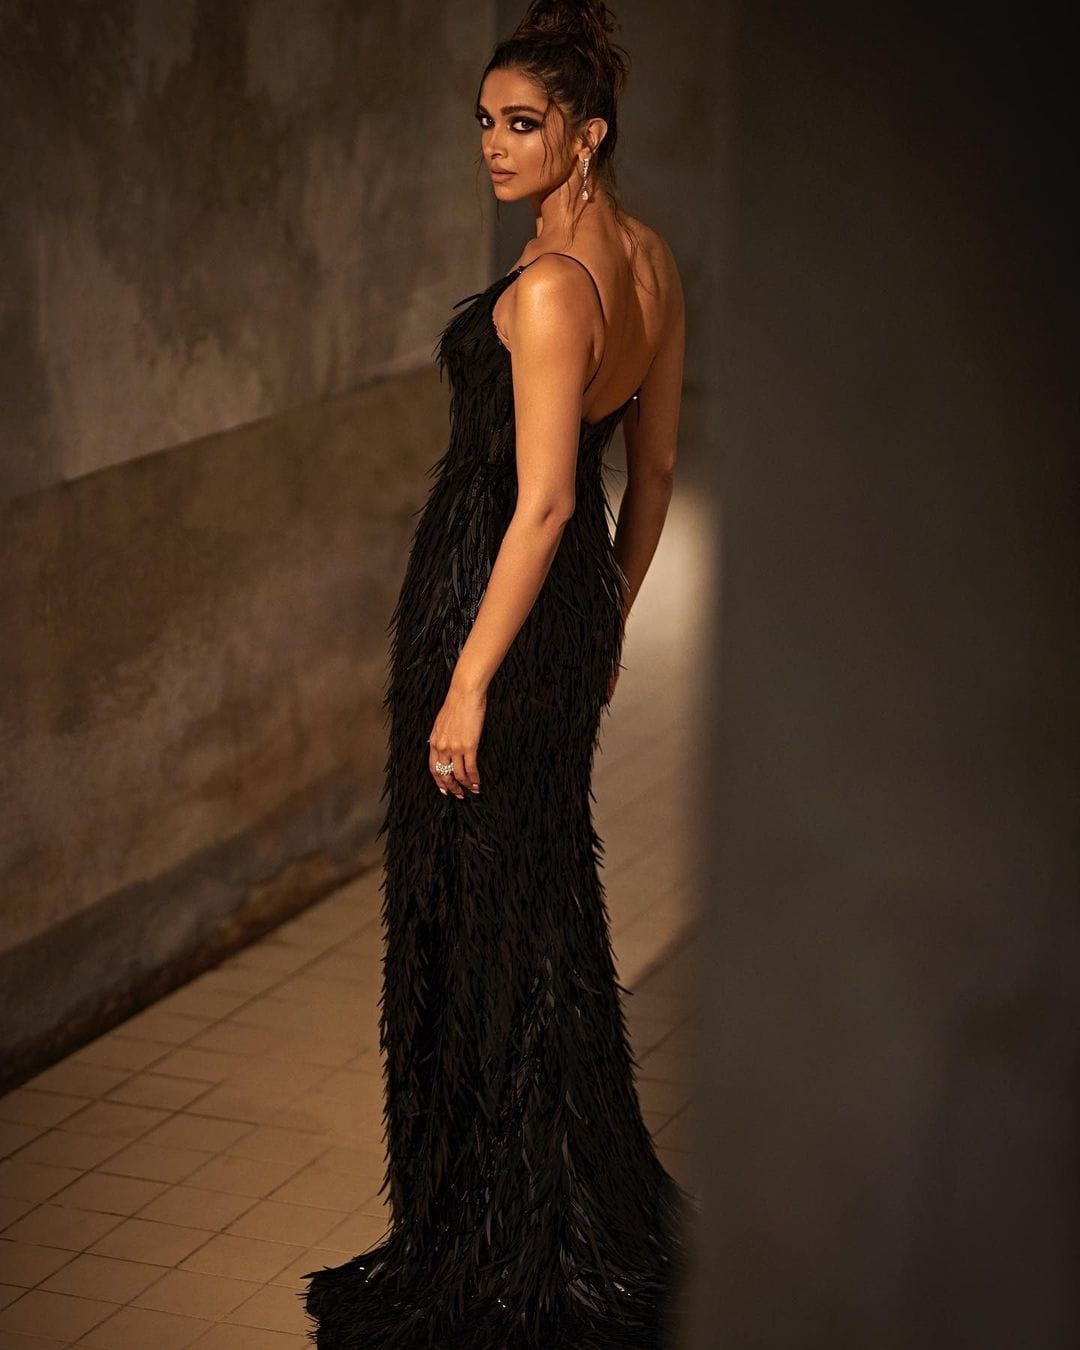 Deepika Padukone looks sexy in a figure-hugging black dress by Louis Vuitton.